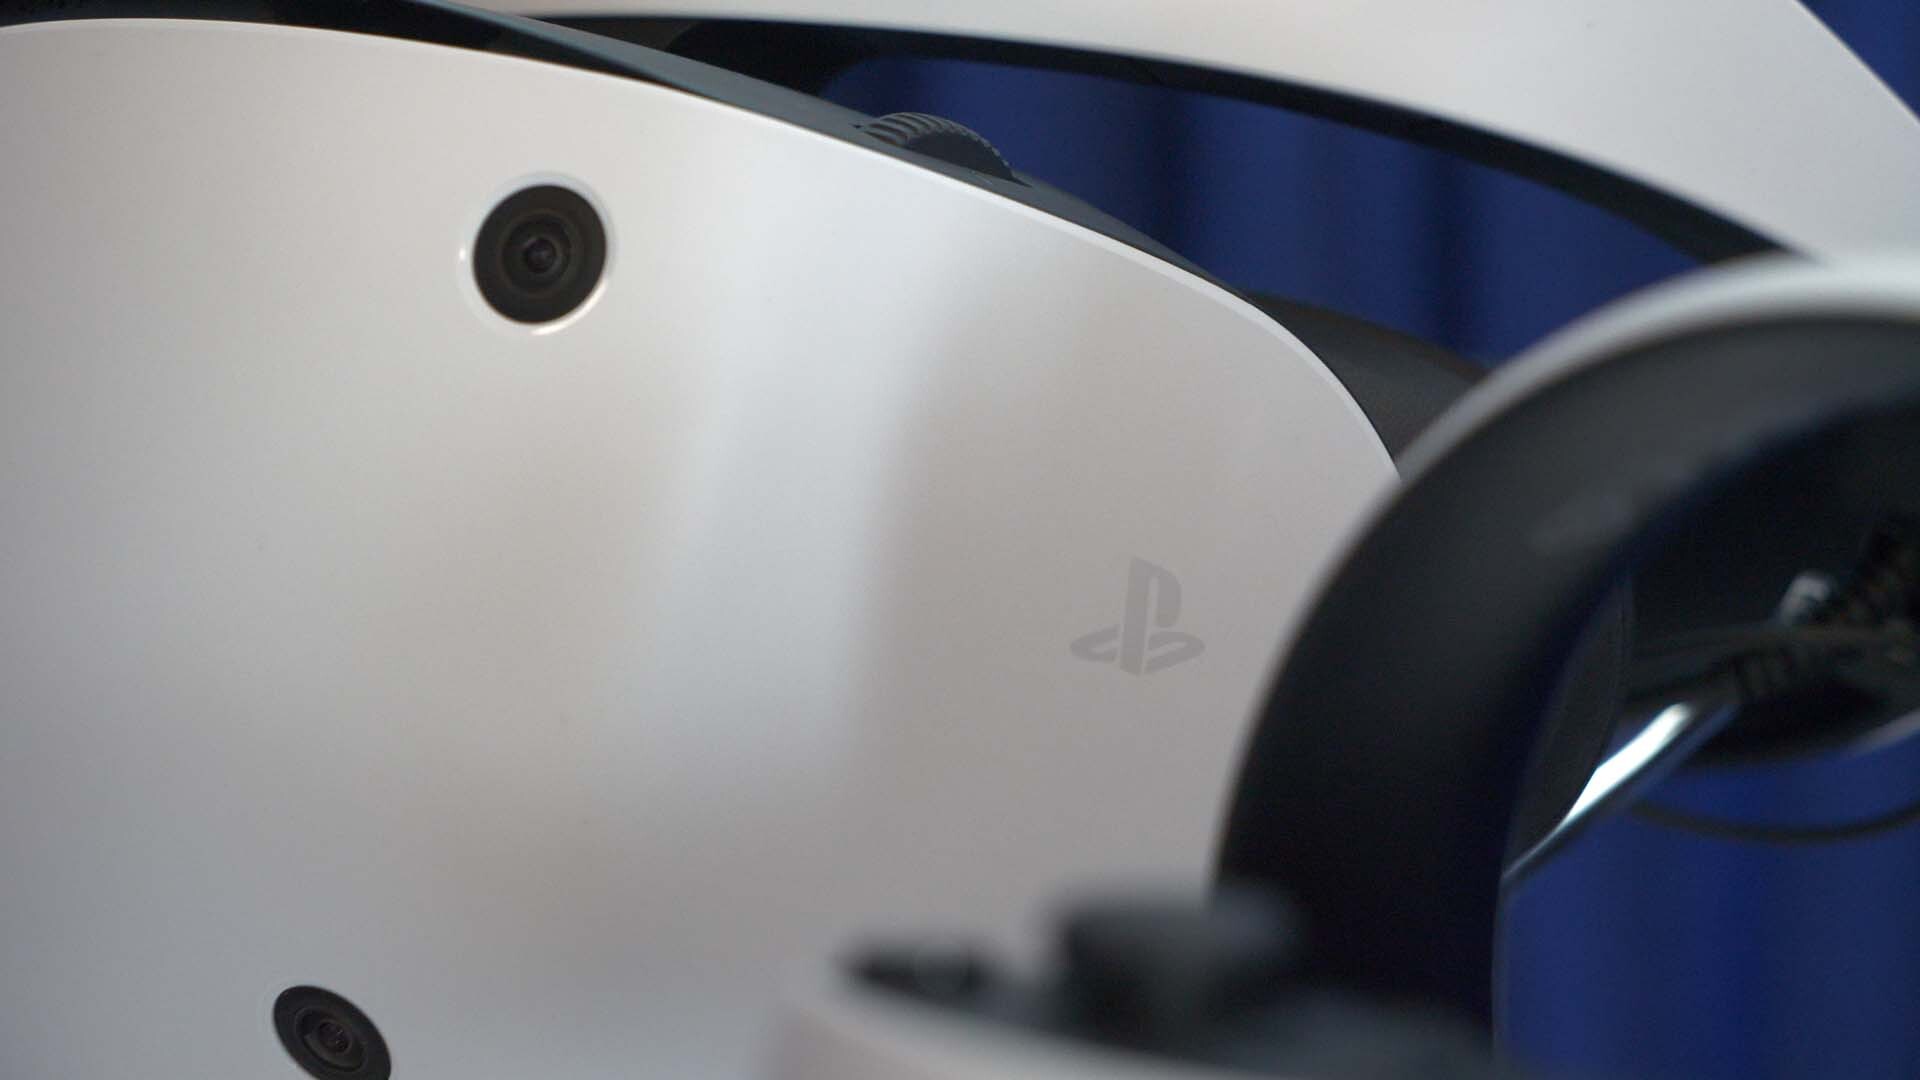 PlayStation VR Review - GameSpot